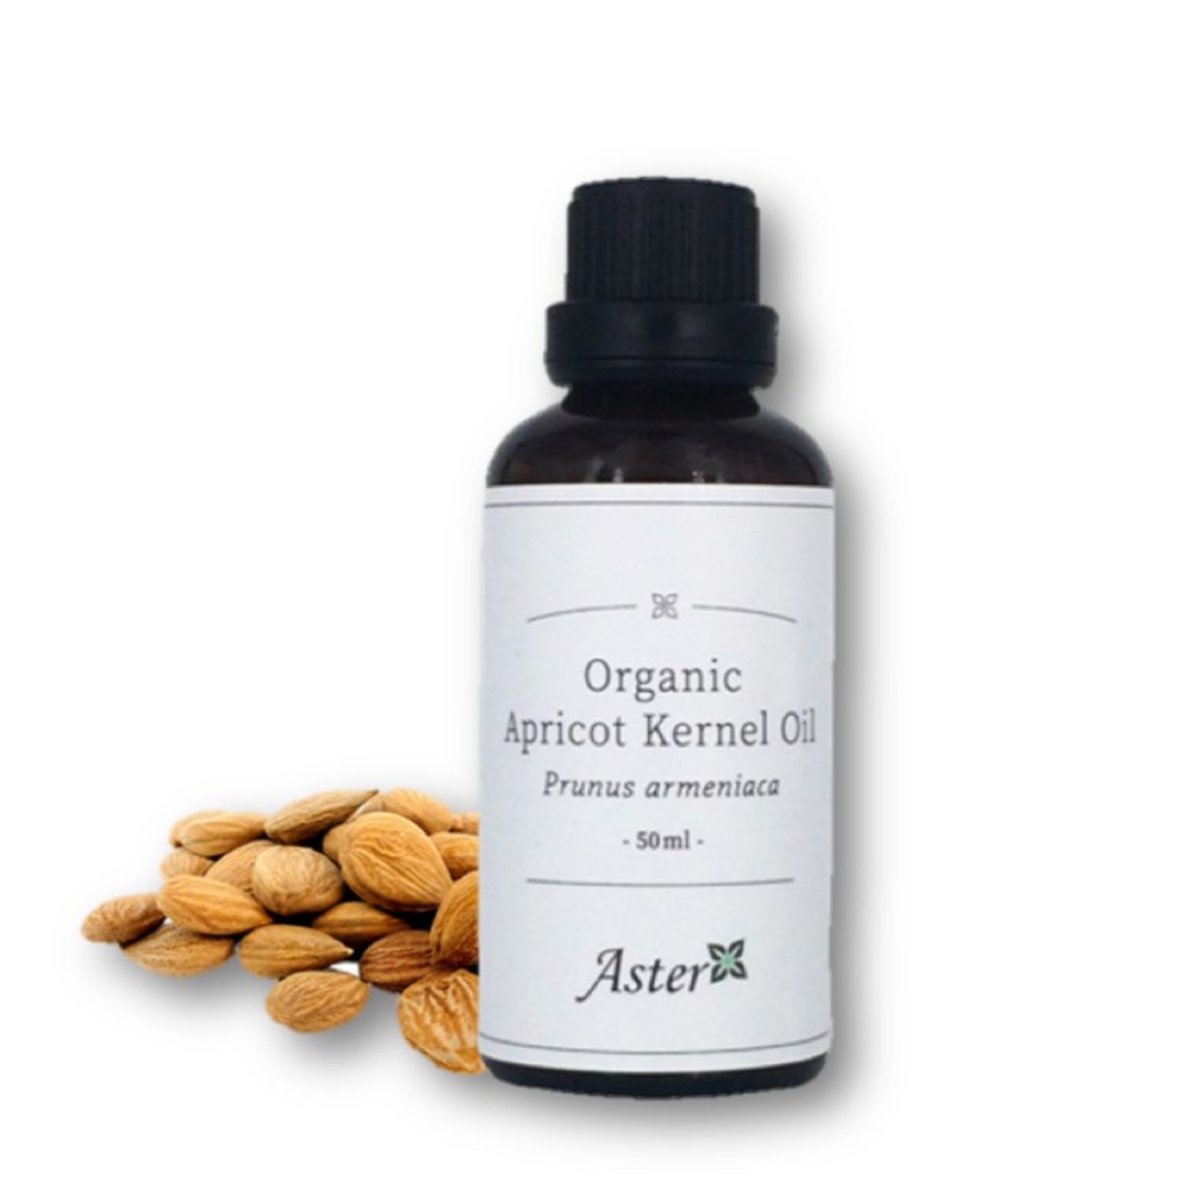 Organic Apricot Kernel Oil (Prunus armeniaca) - 50ml